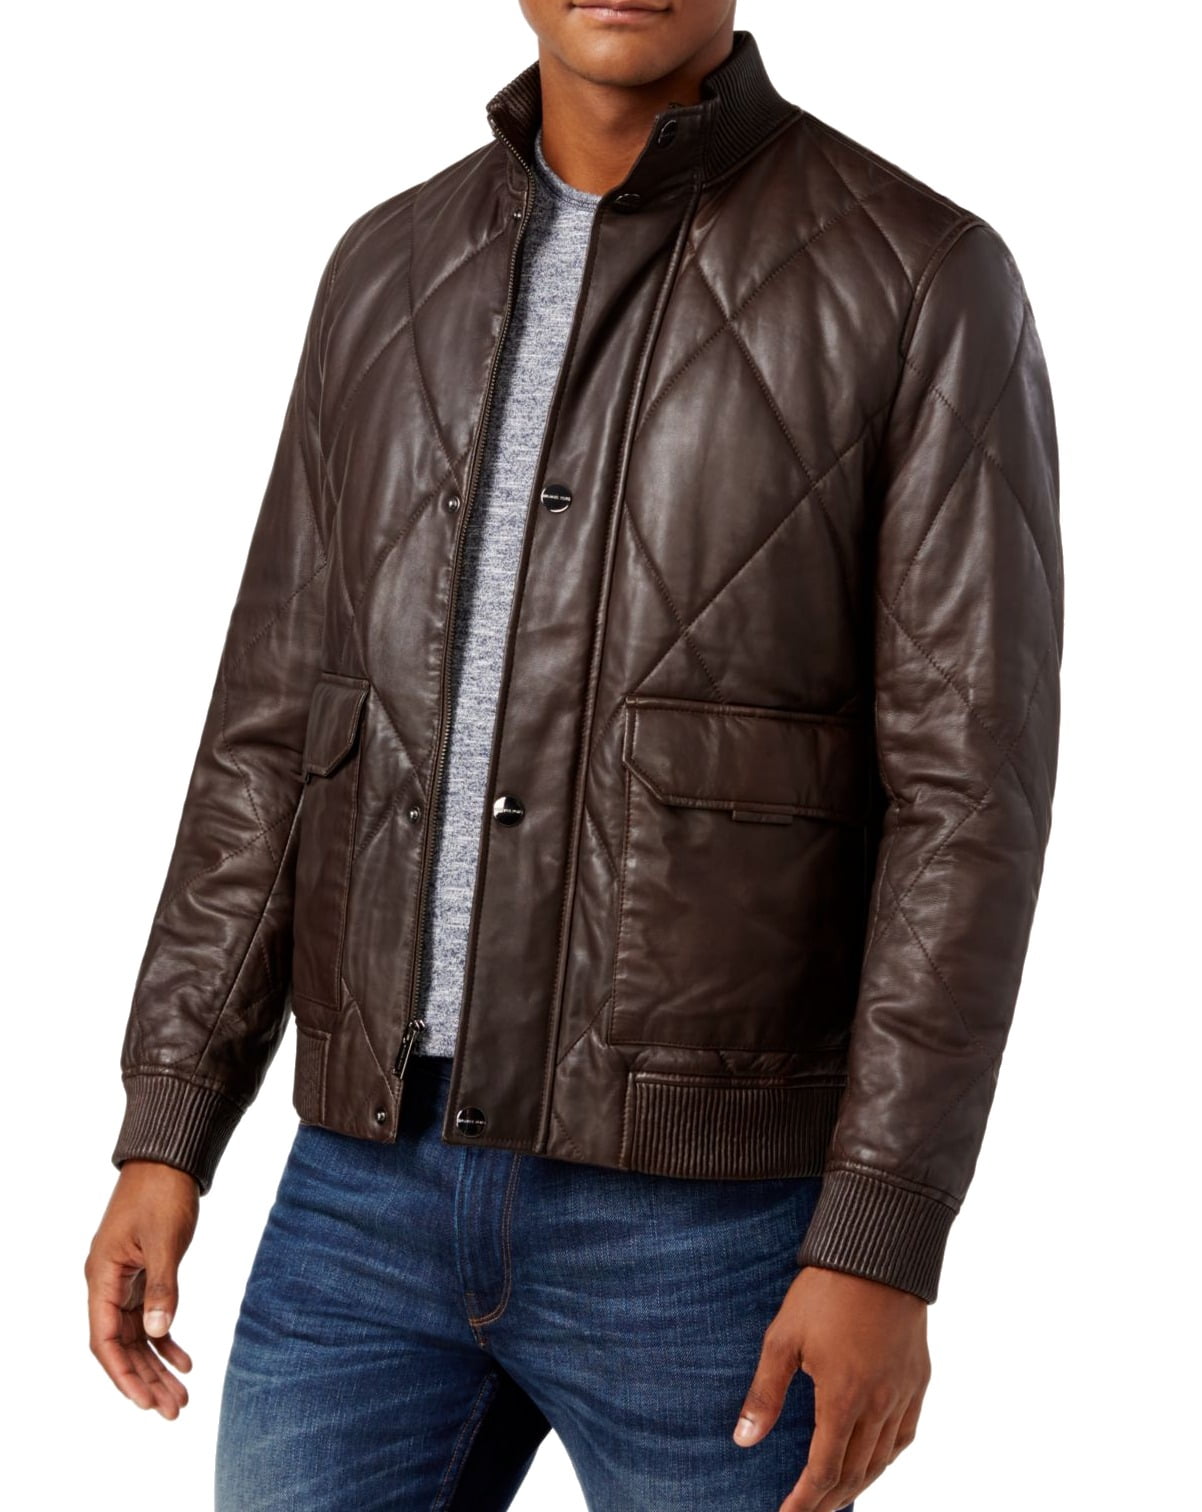 Michael Kors New Brown Mens Size Medium M Motorcycle Leather Jacket